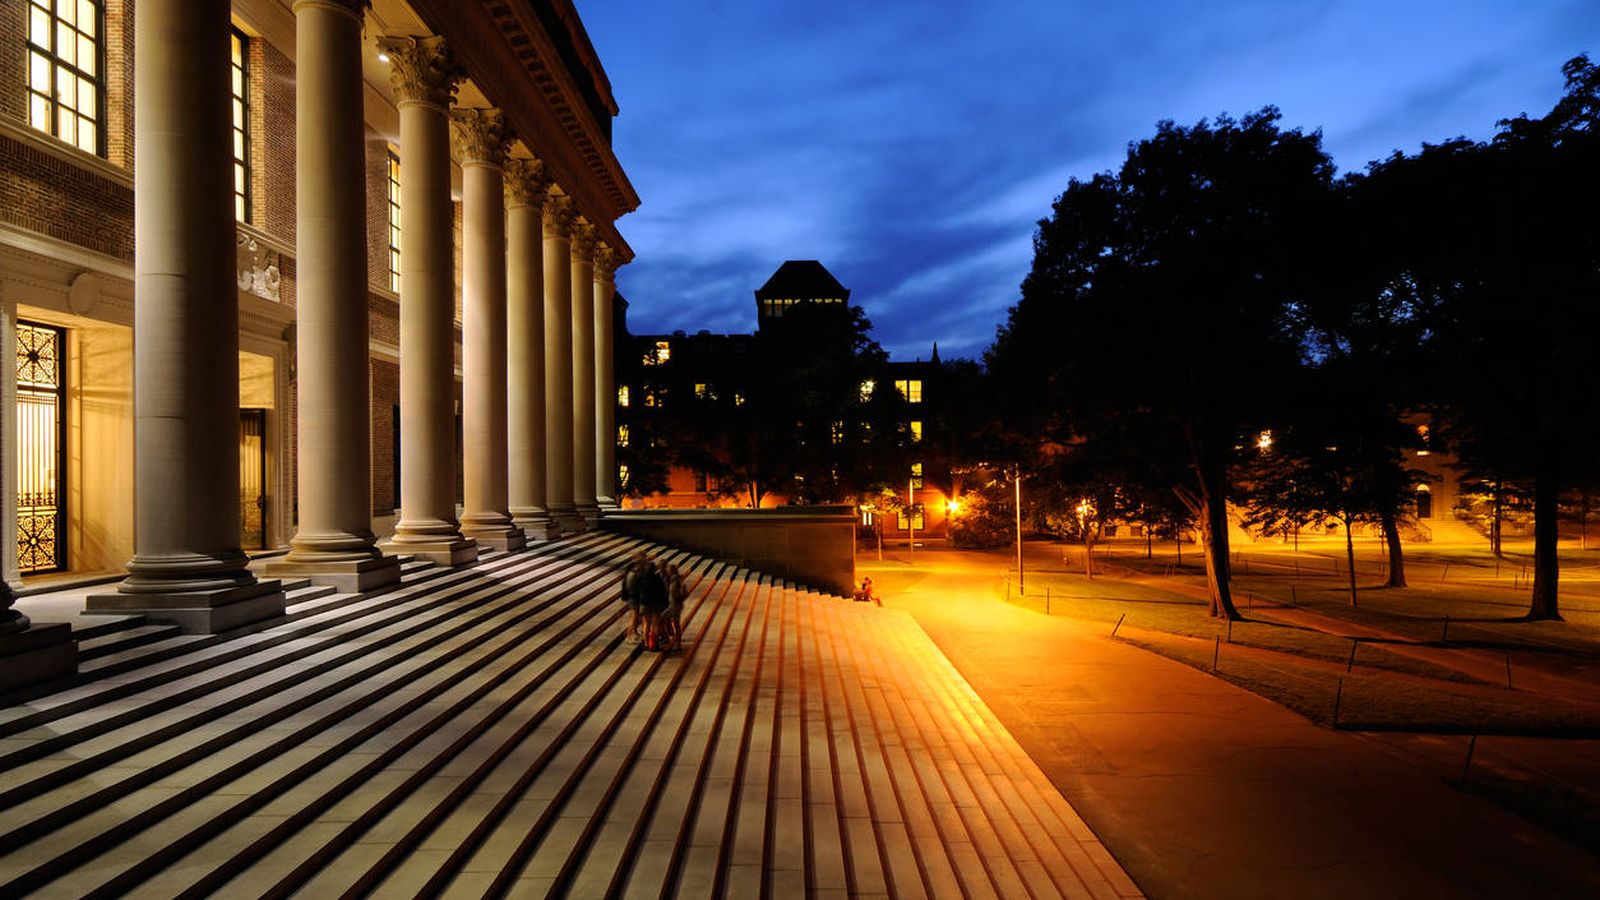 Foto: La biblioteca de la universidad, de noche. (iStock)